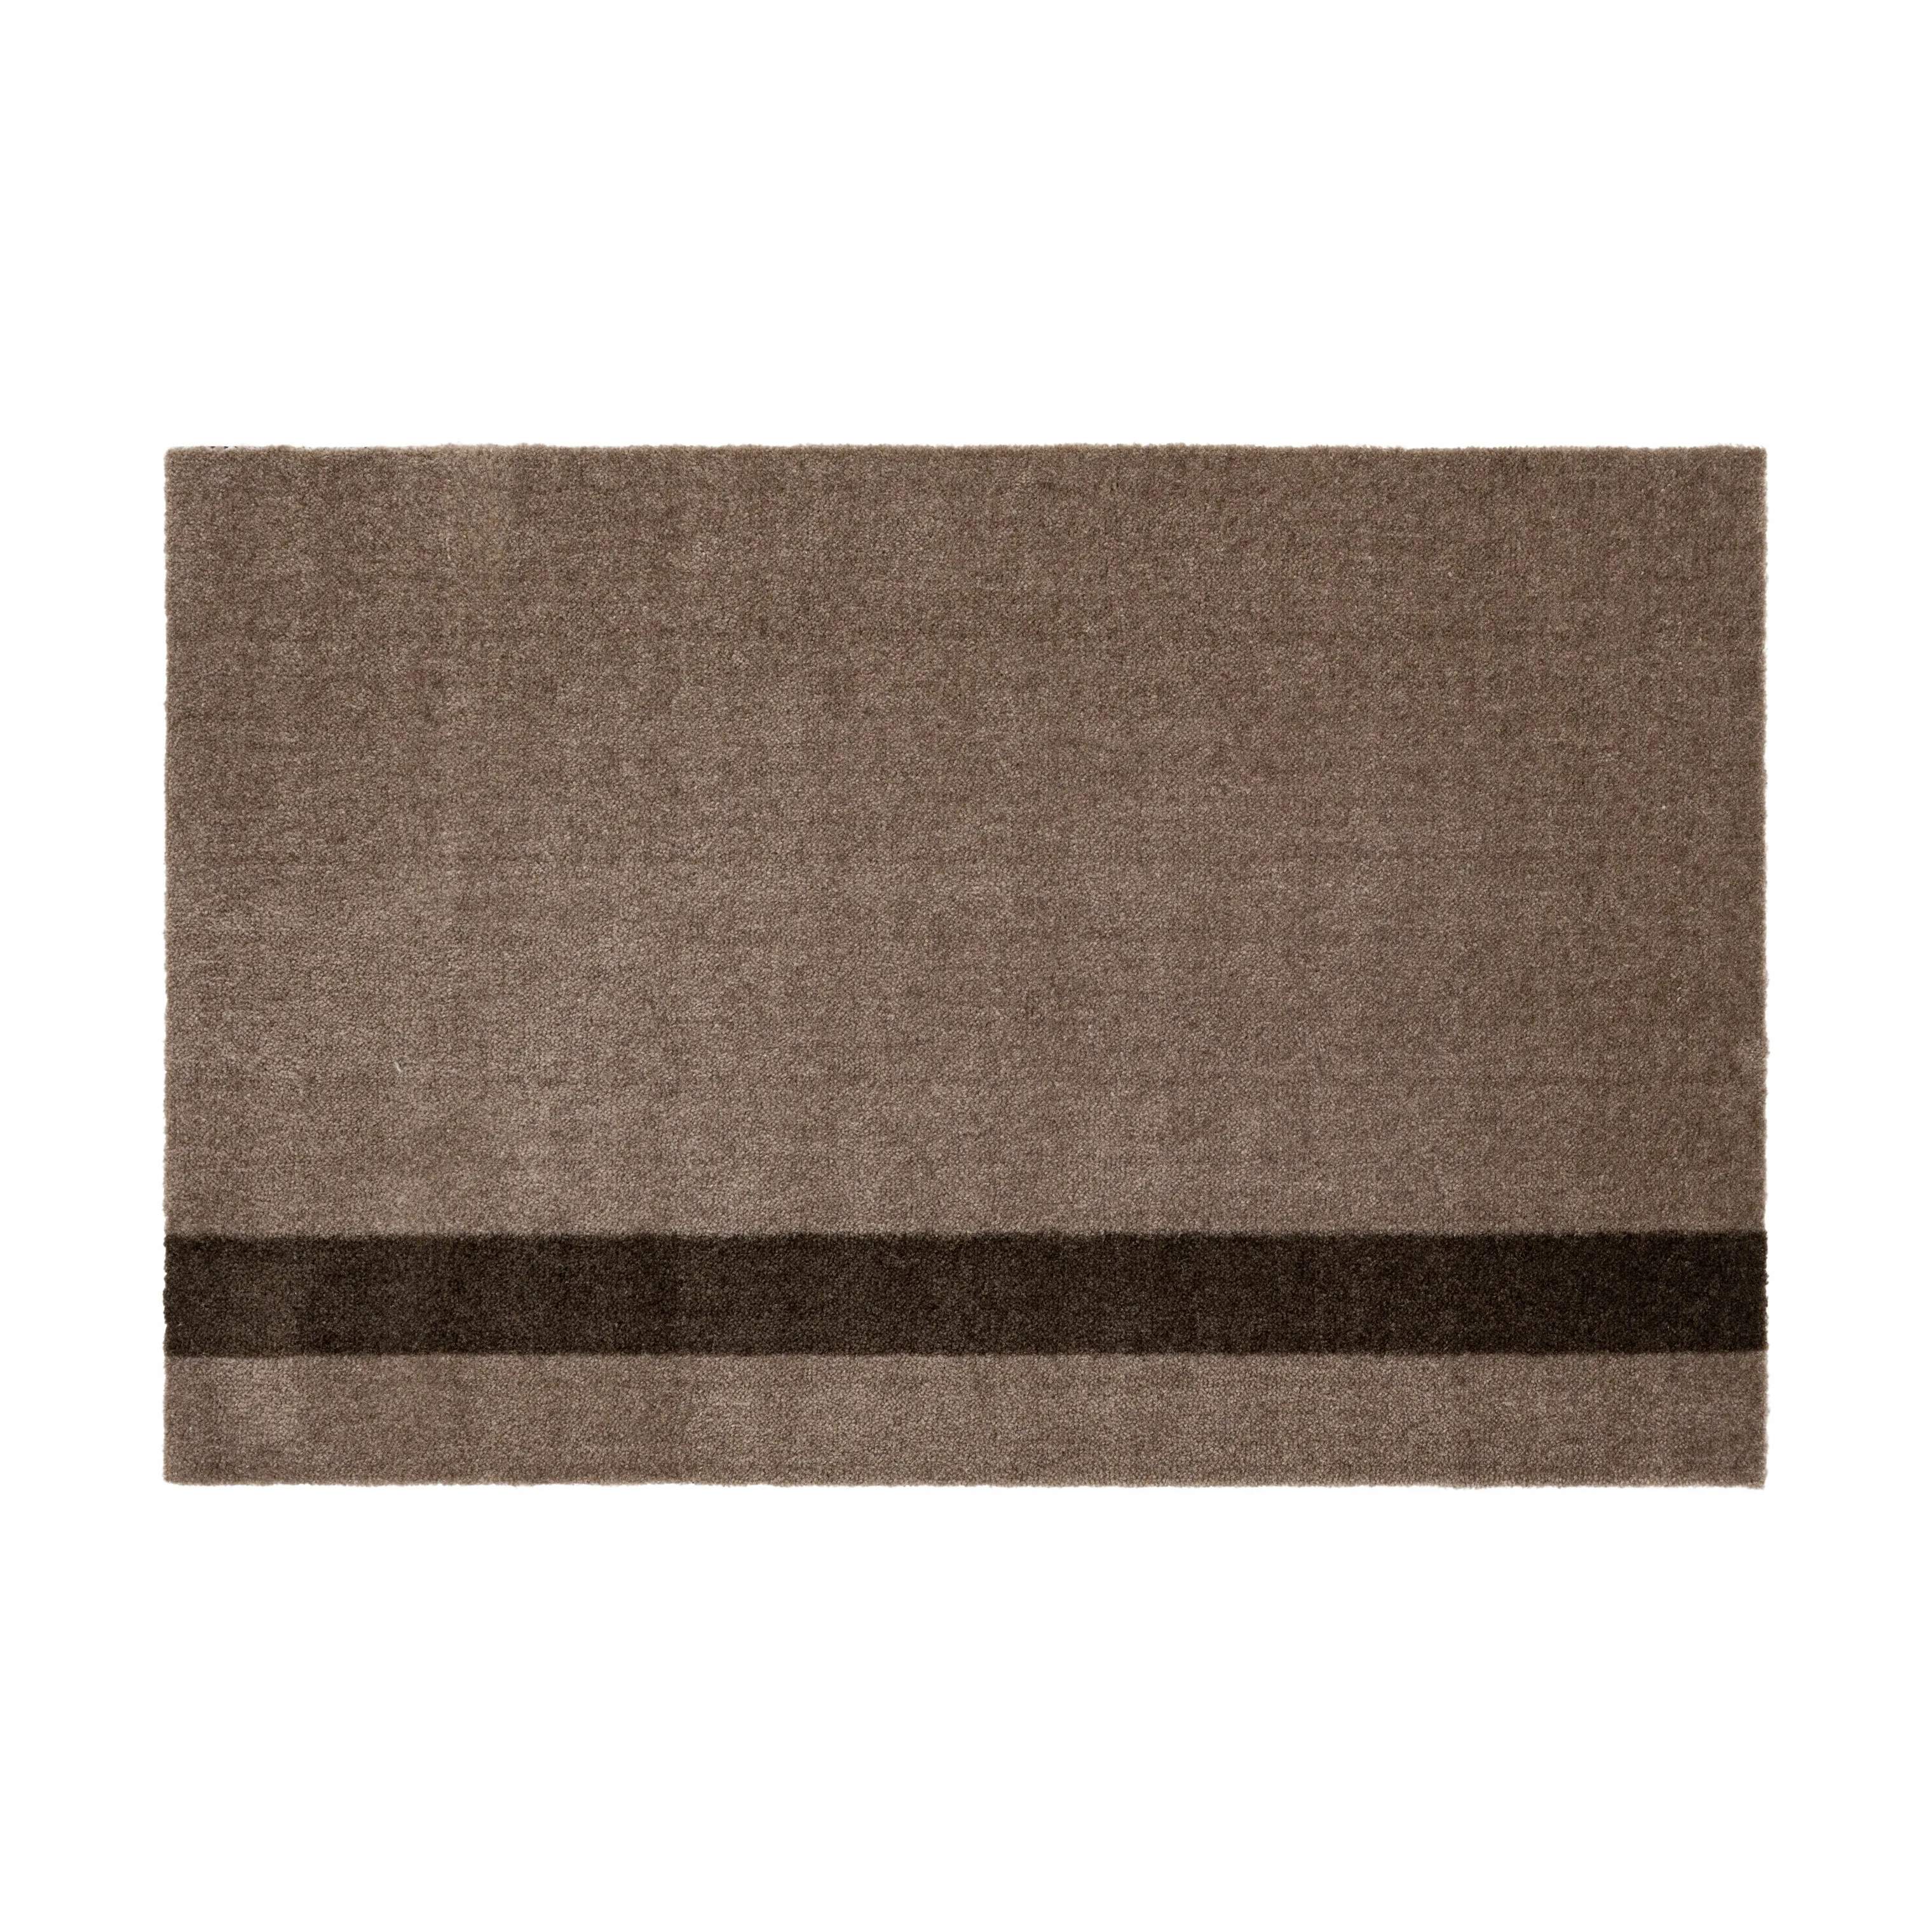 Stripes Vertikal Smudsmåtte, sand/brun, large